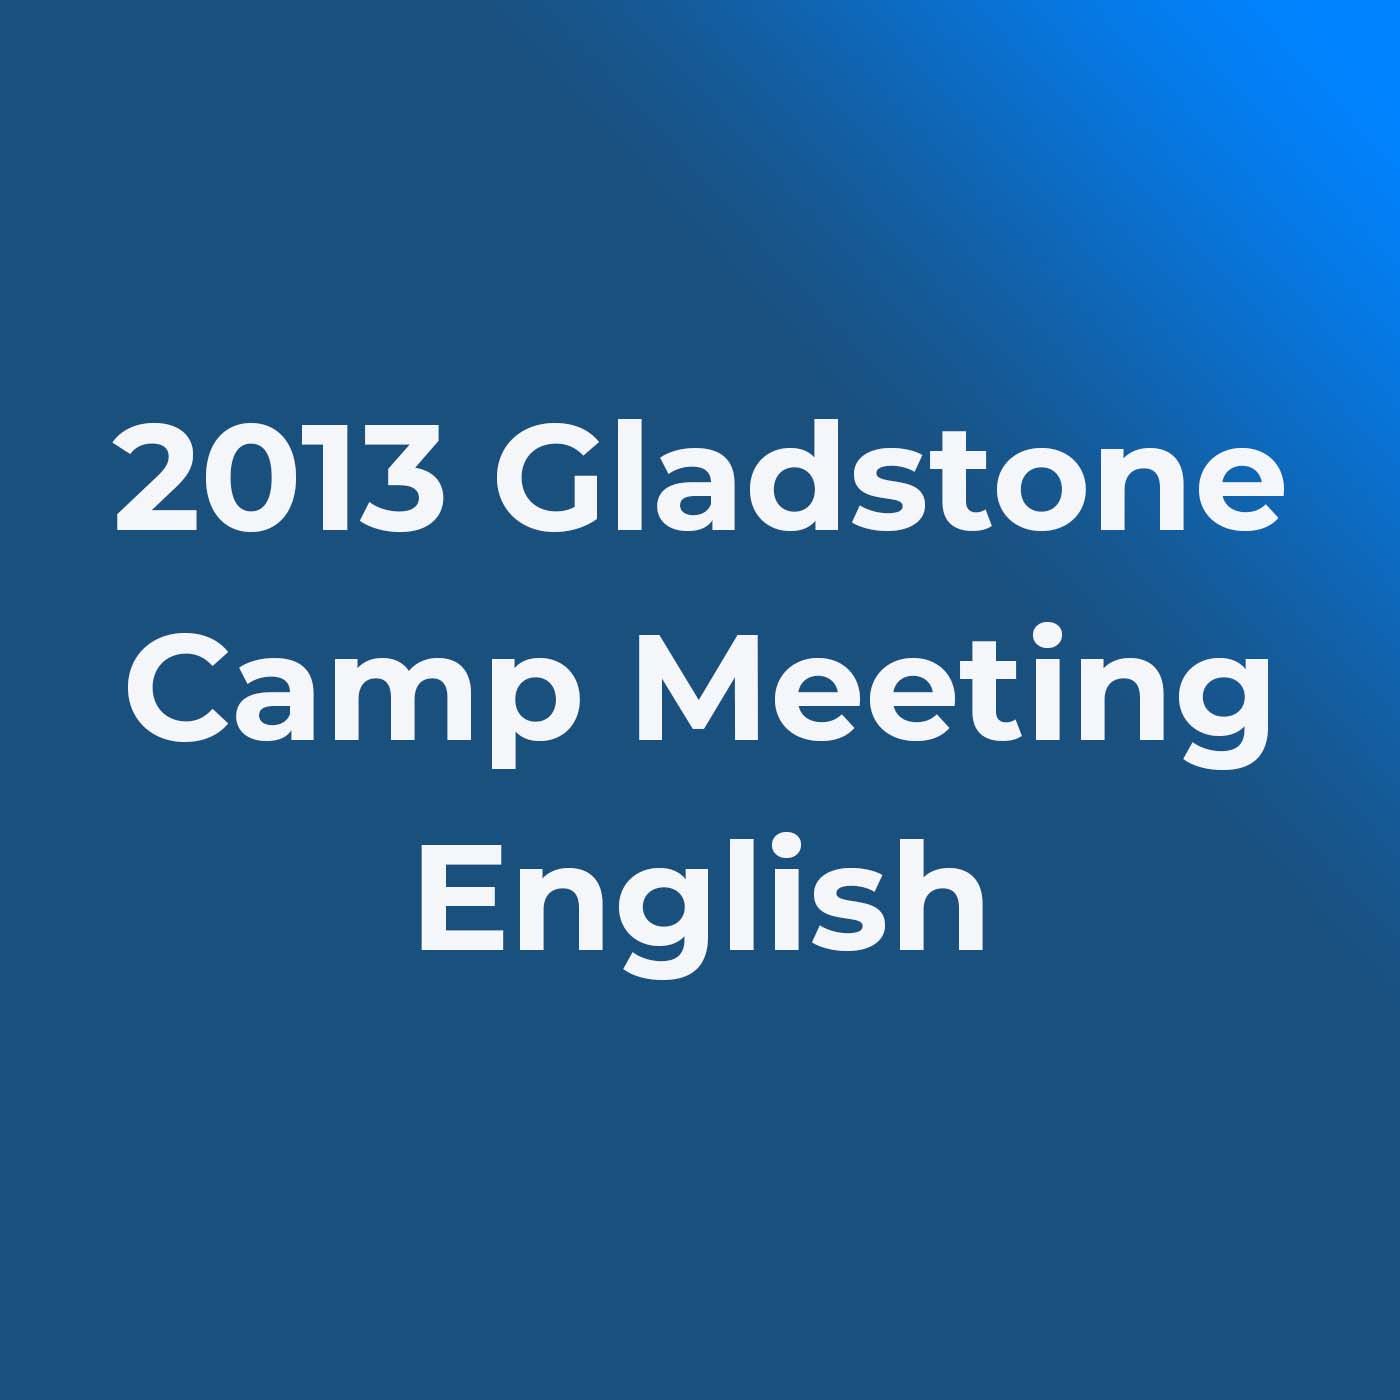 2013 Gladstone Camp Meeting